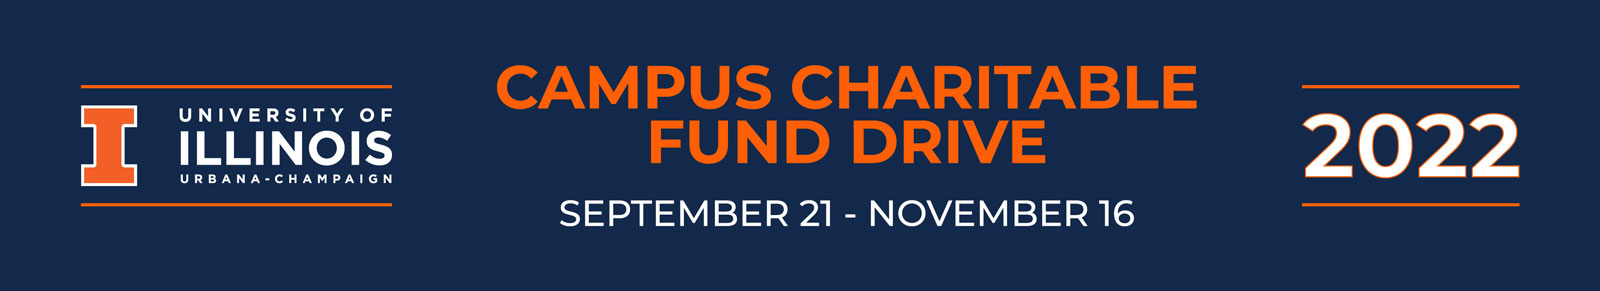 Campus Charitable Fund Drive September 21 - November 16, 2022